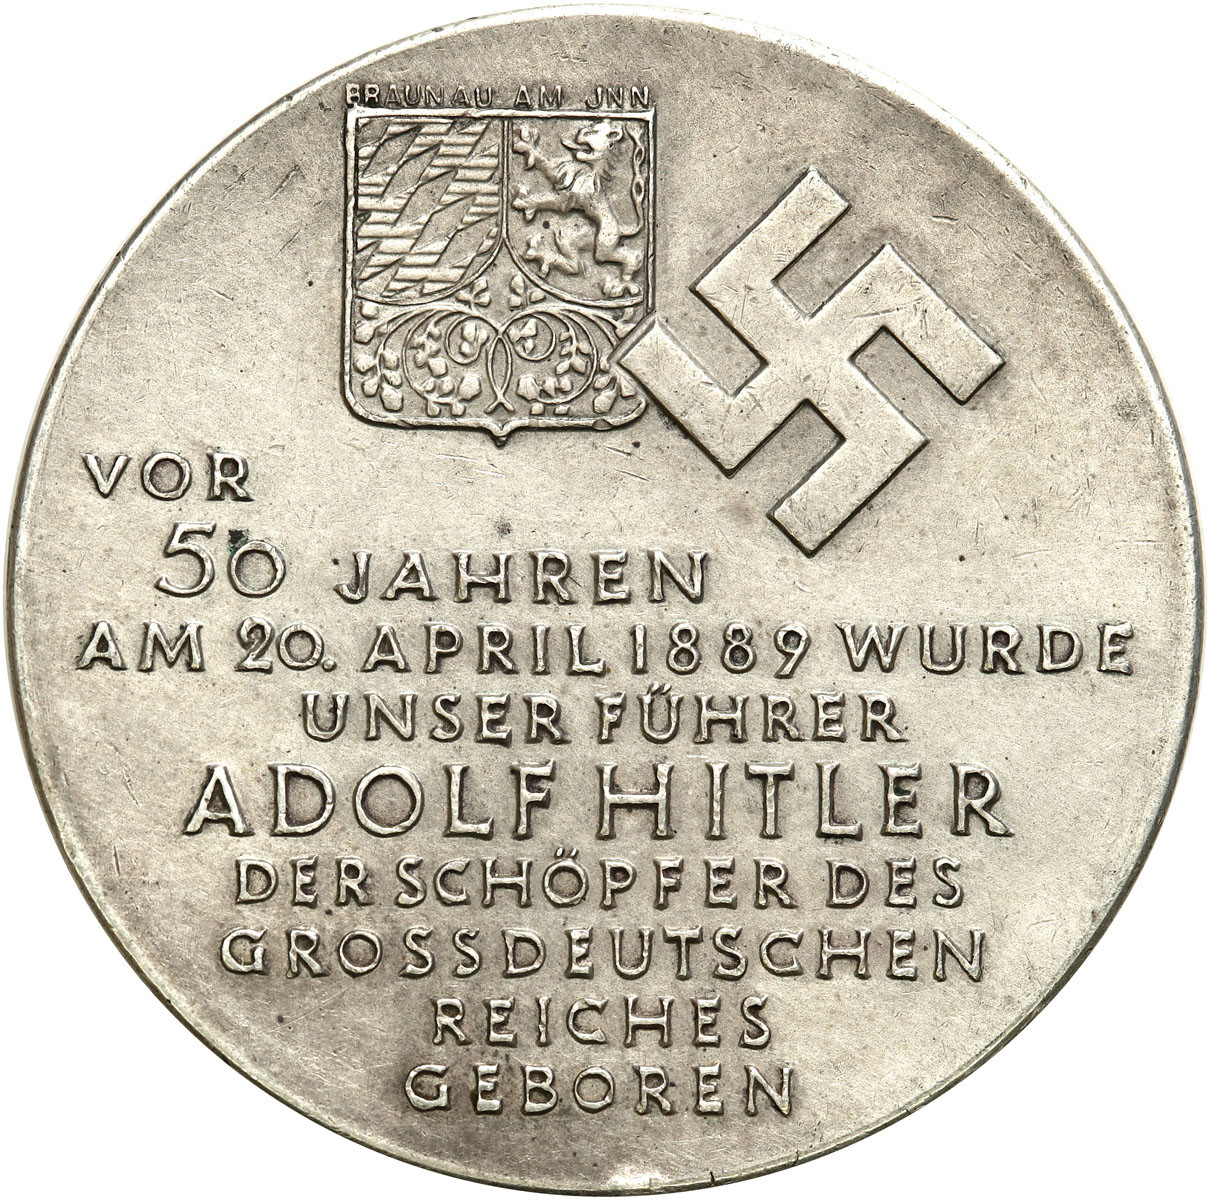 Niemcy, III Rzesza. Medal A. Hitler 1939, srebro